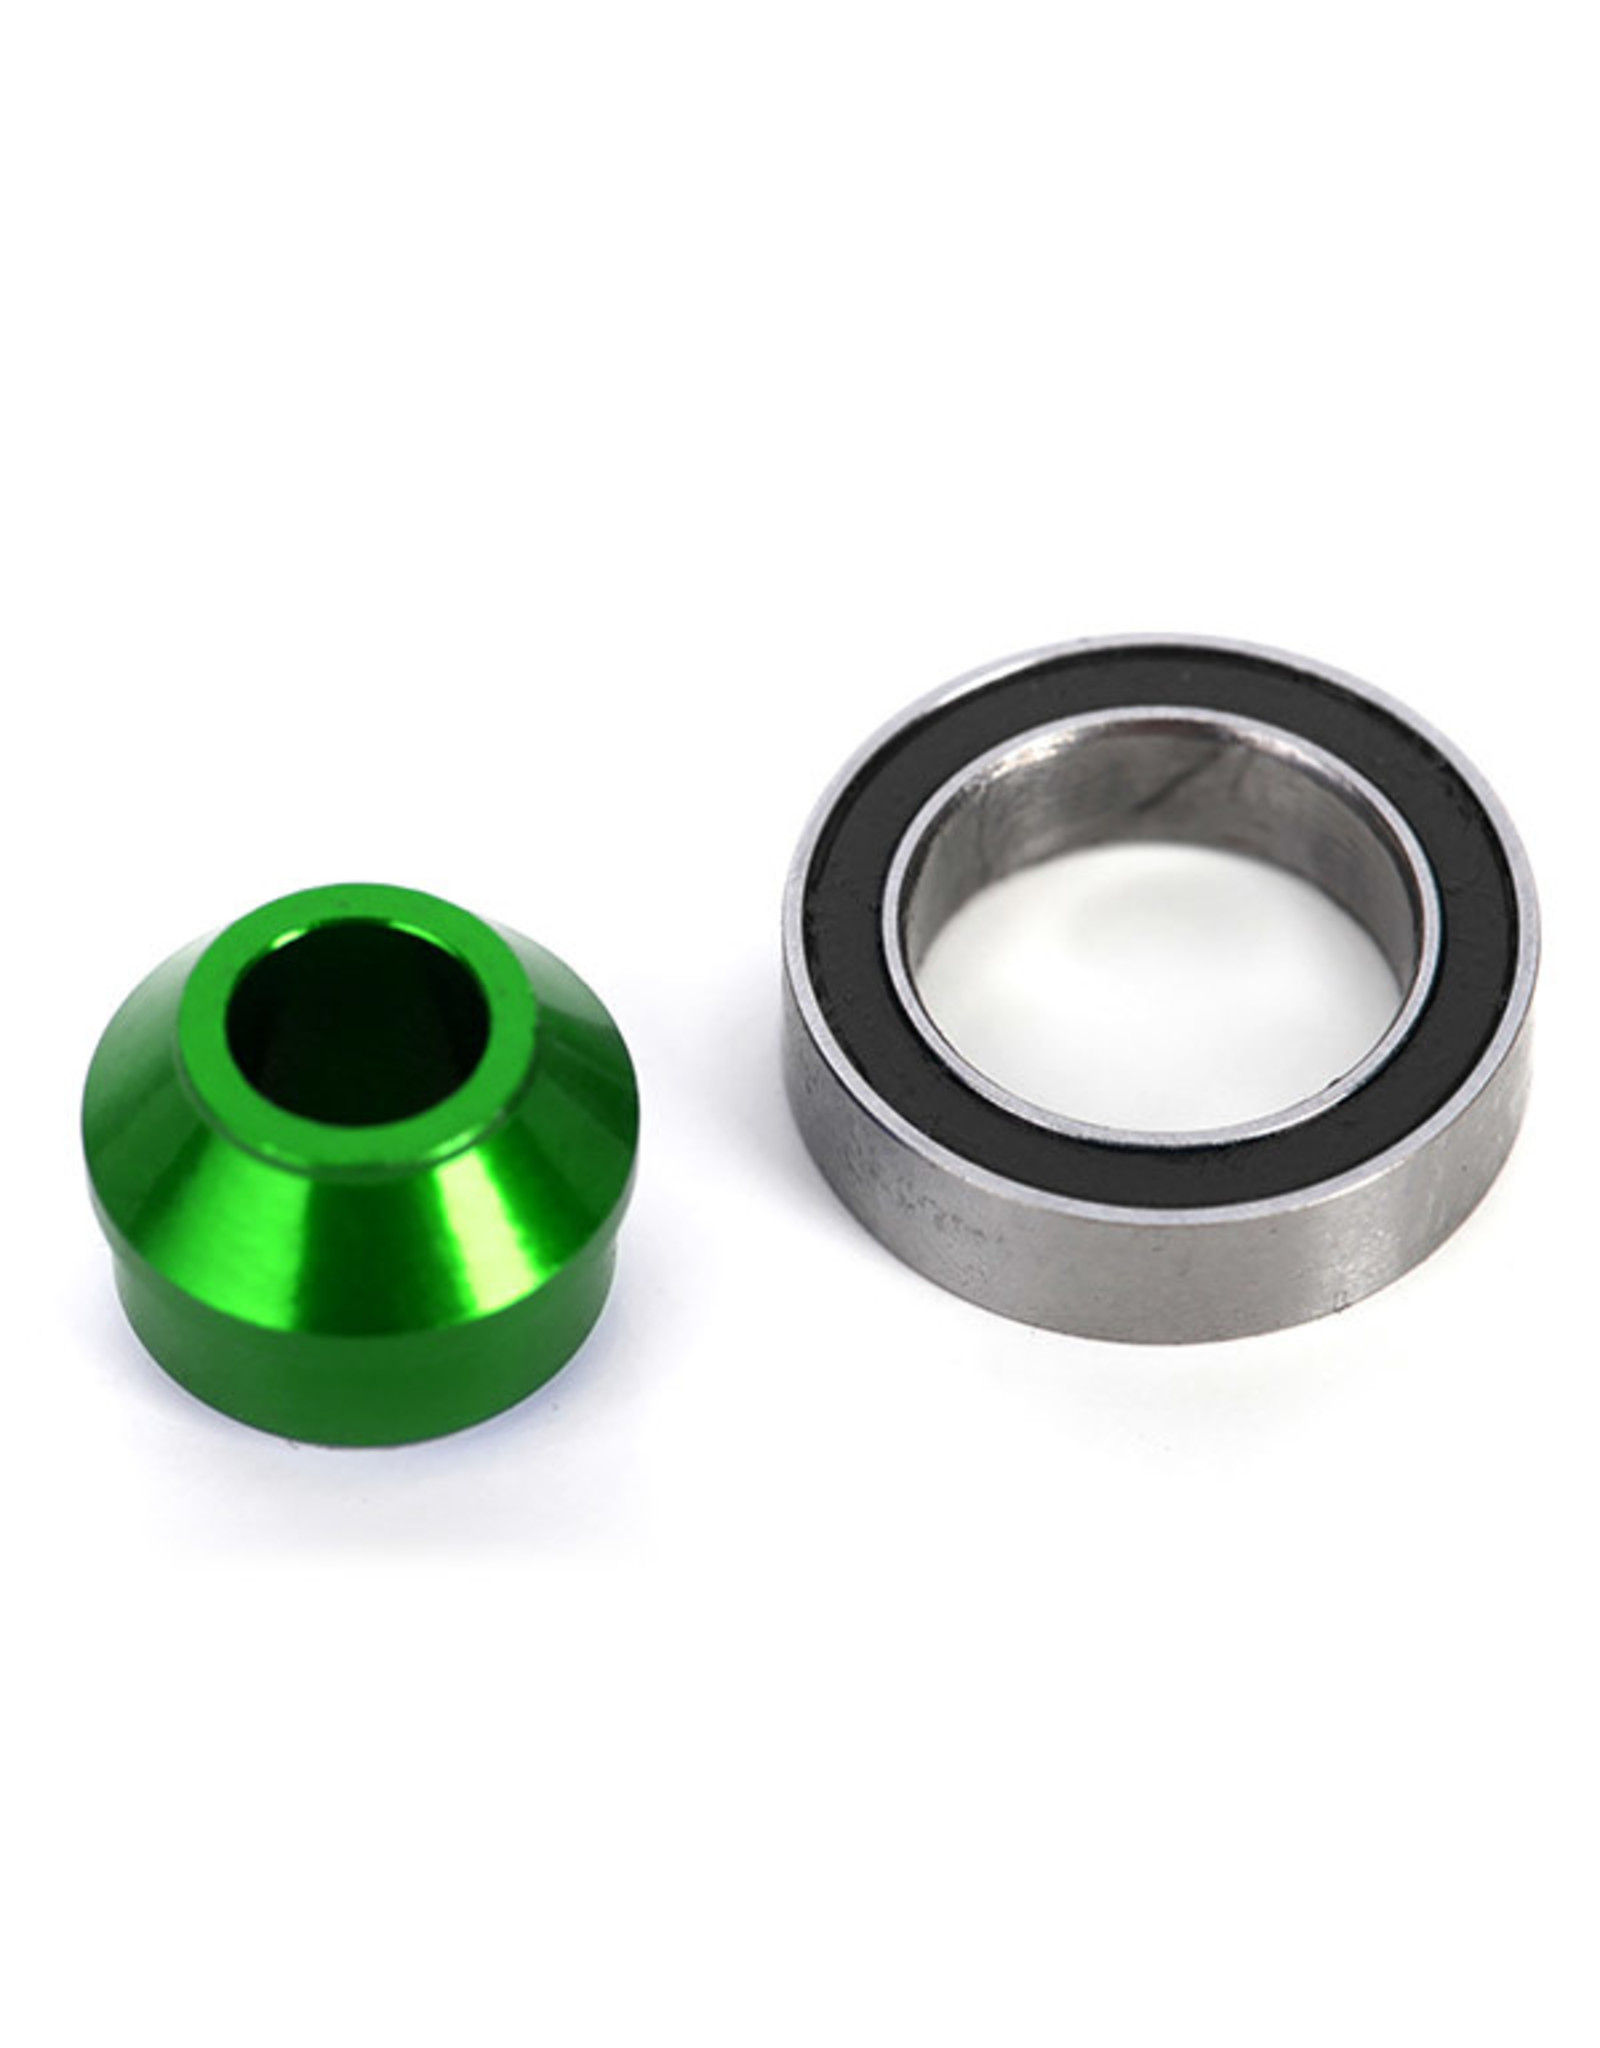 Traxxas Bearing adapter, 6061-T6 aluminum (green-anodized) (1)/ 10x15x4mm ball bearing (black rubber sealed) (1) (for slipper shaft)